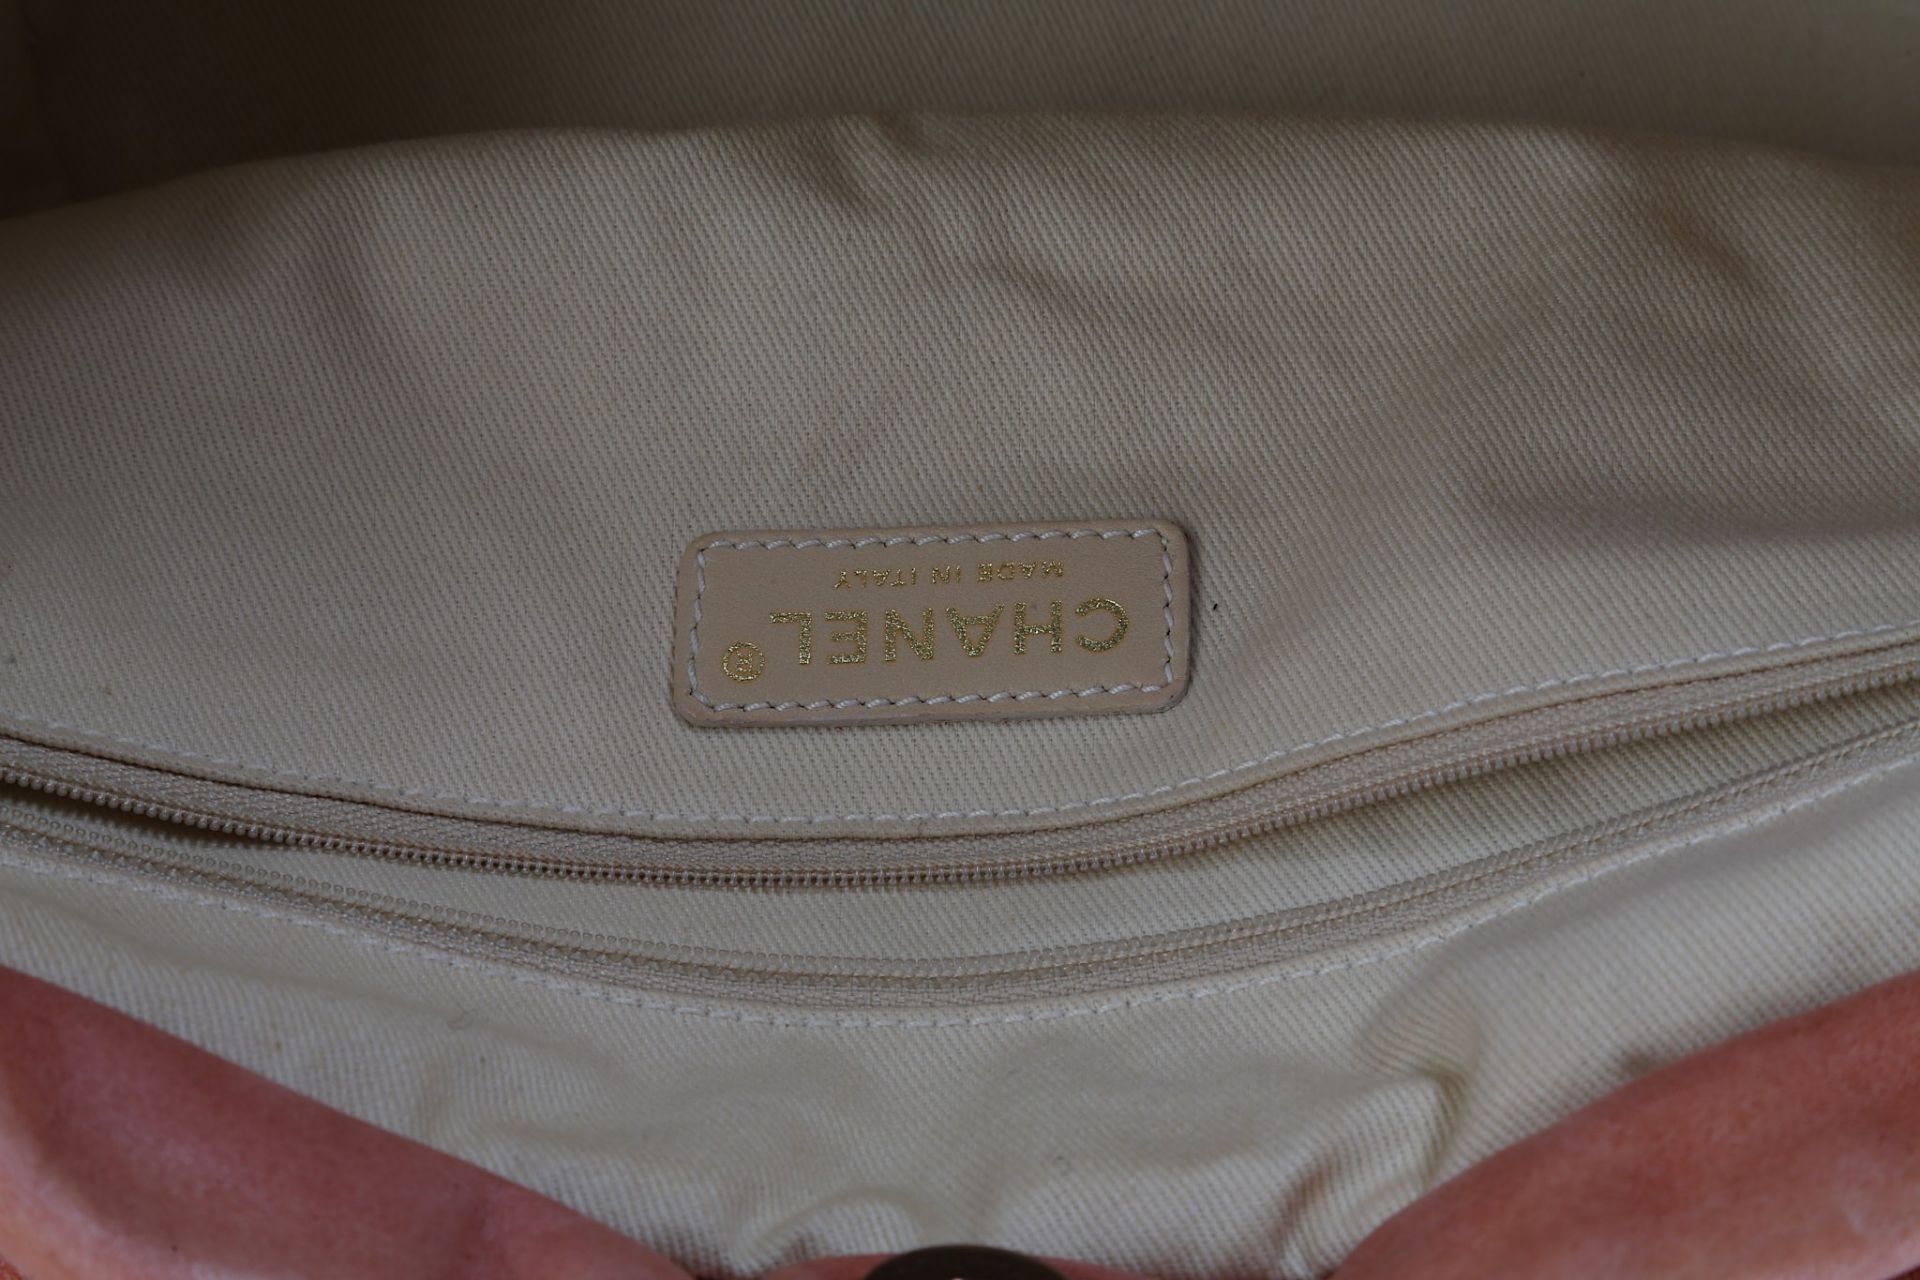 Chanel Coral Leather Shoulder Bag, c. 2005-06, puf - Image 6 of 7